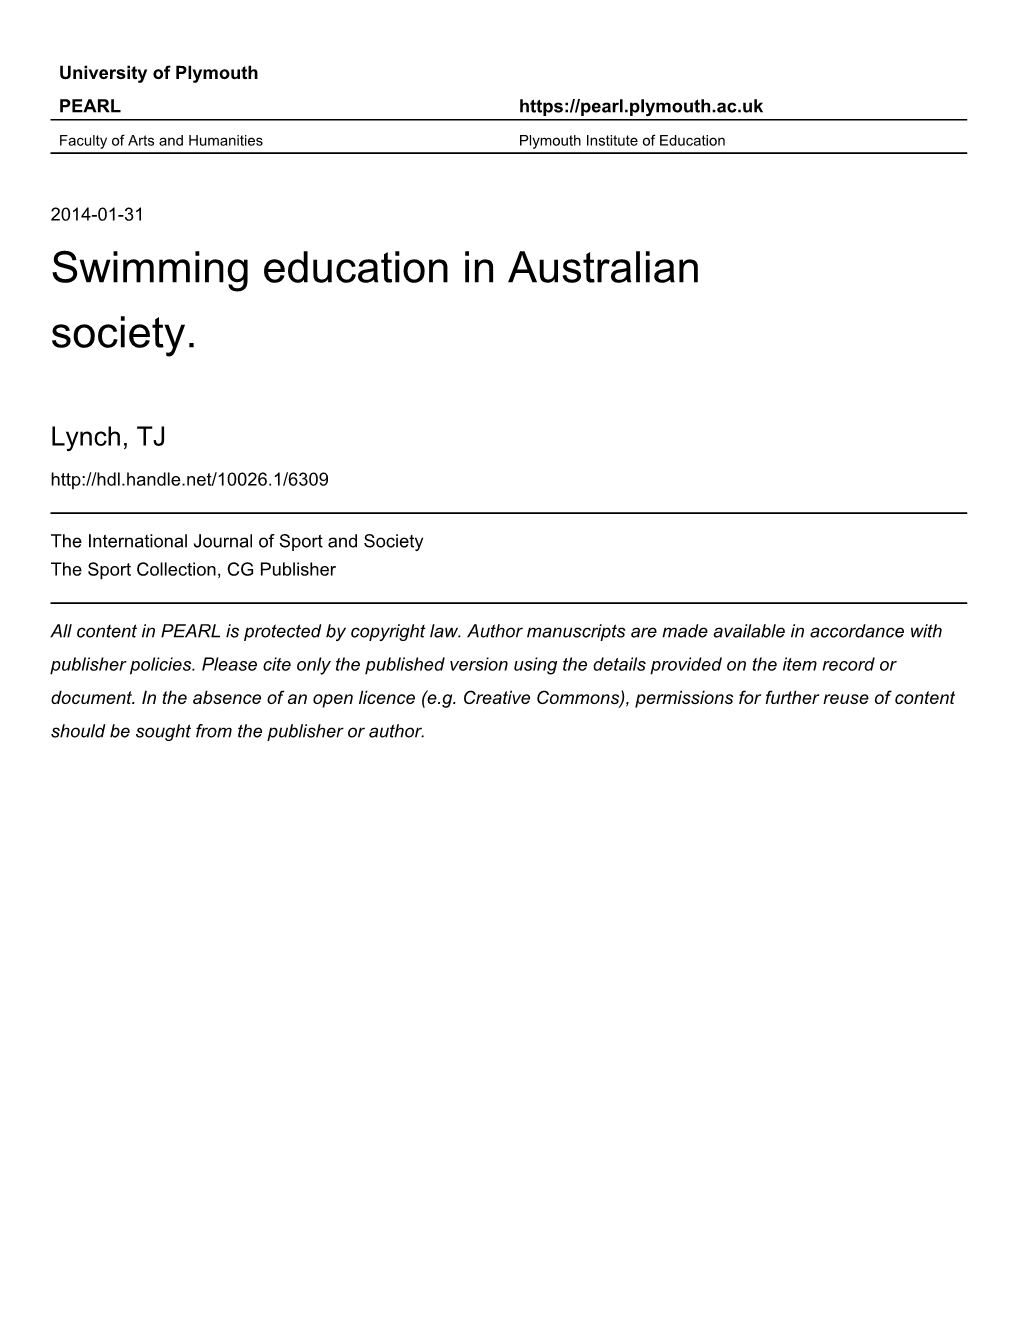 Swimming Education in Australian Society